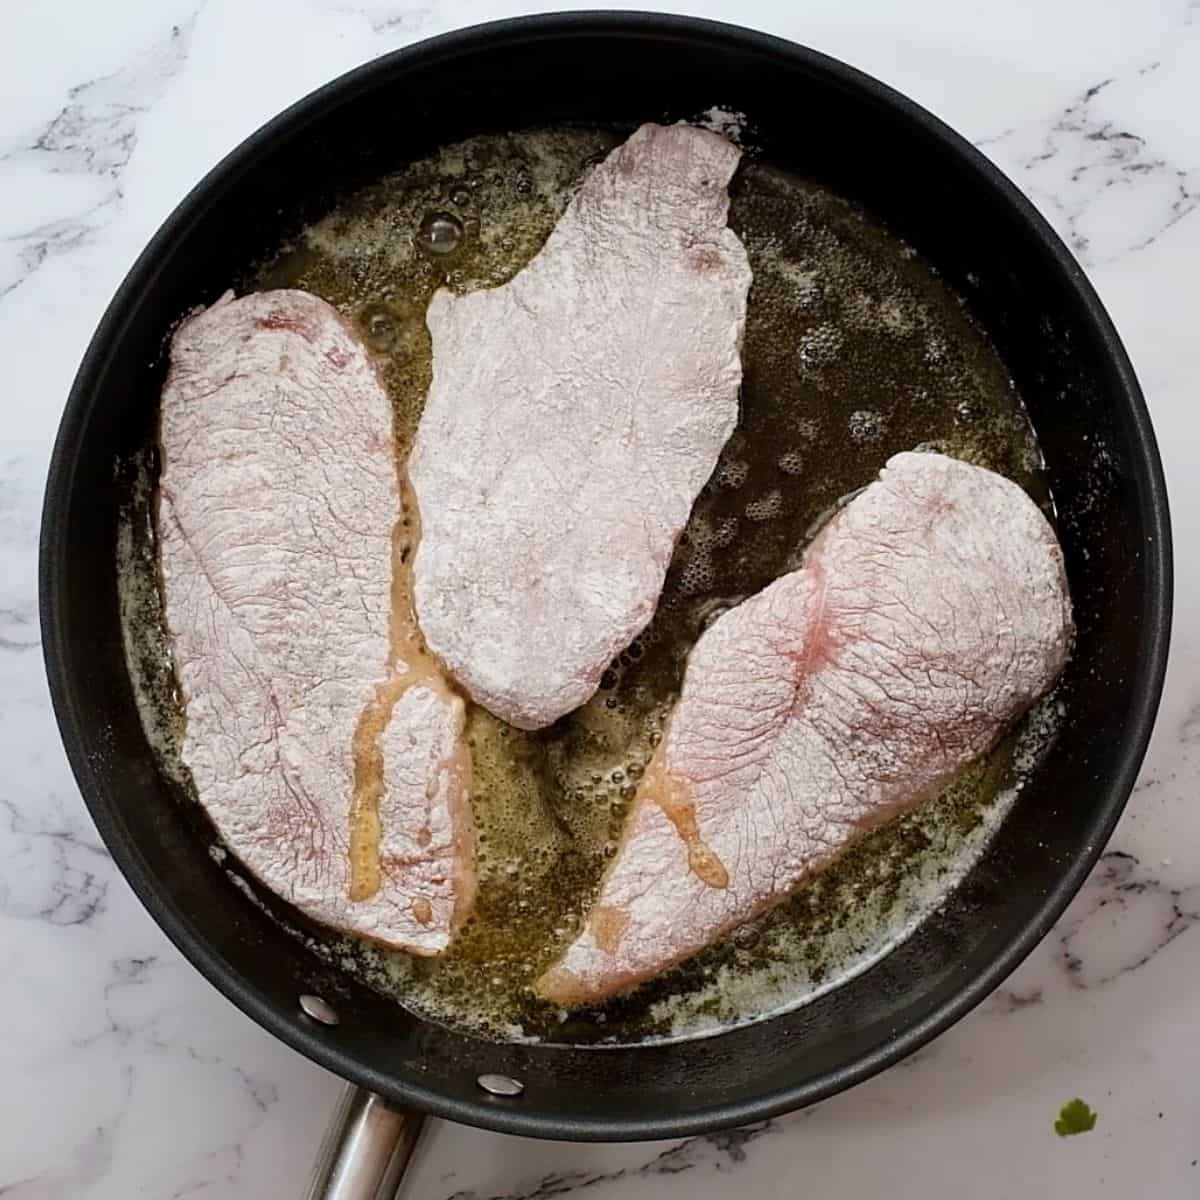 Chicken coated in flour in saute pan.